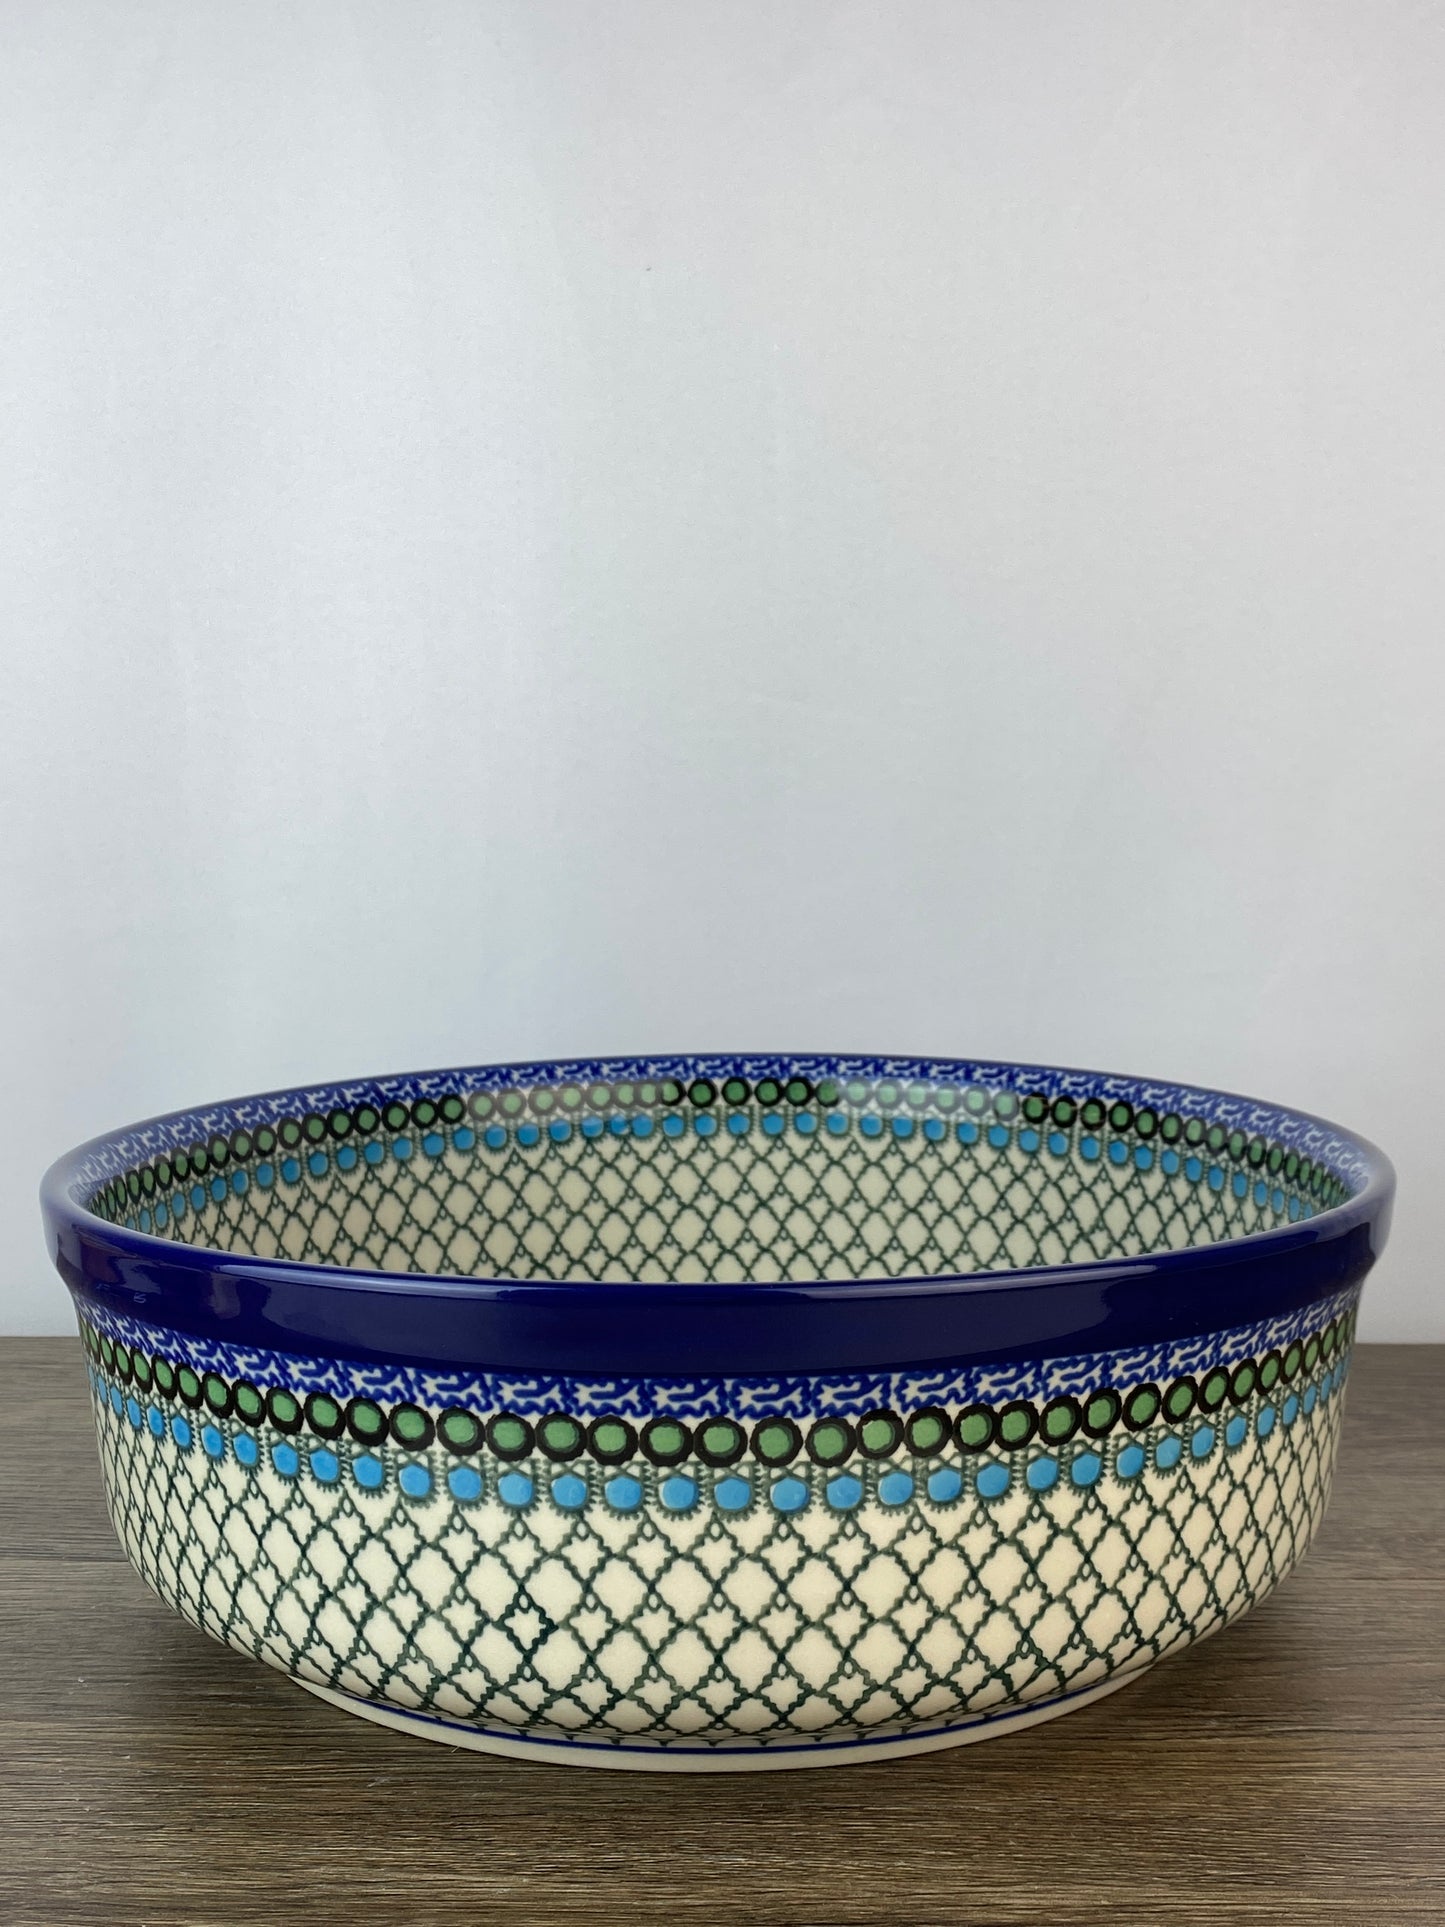 SALE Large Unikat Serving Bowl - Shape 116 - Pattern U72